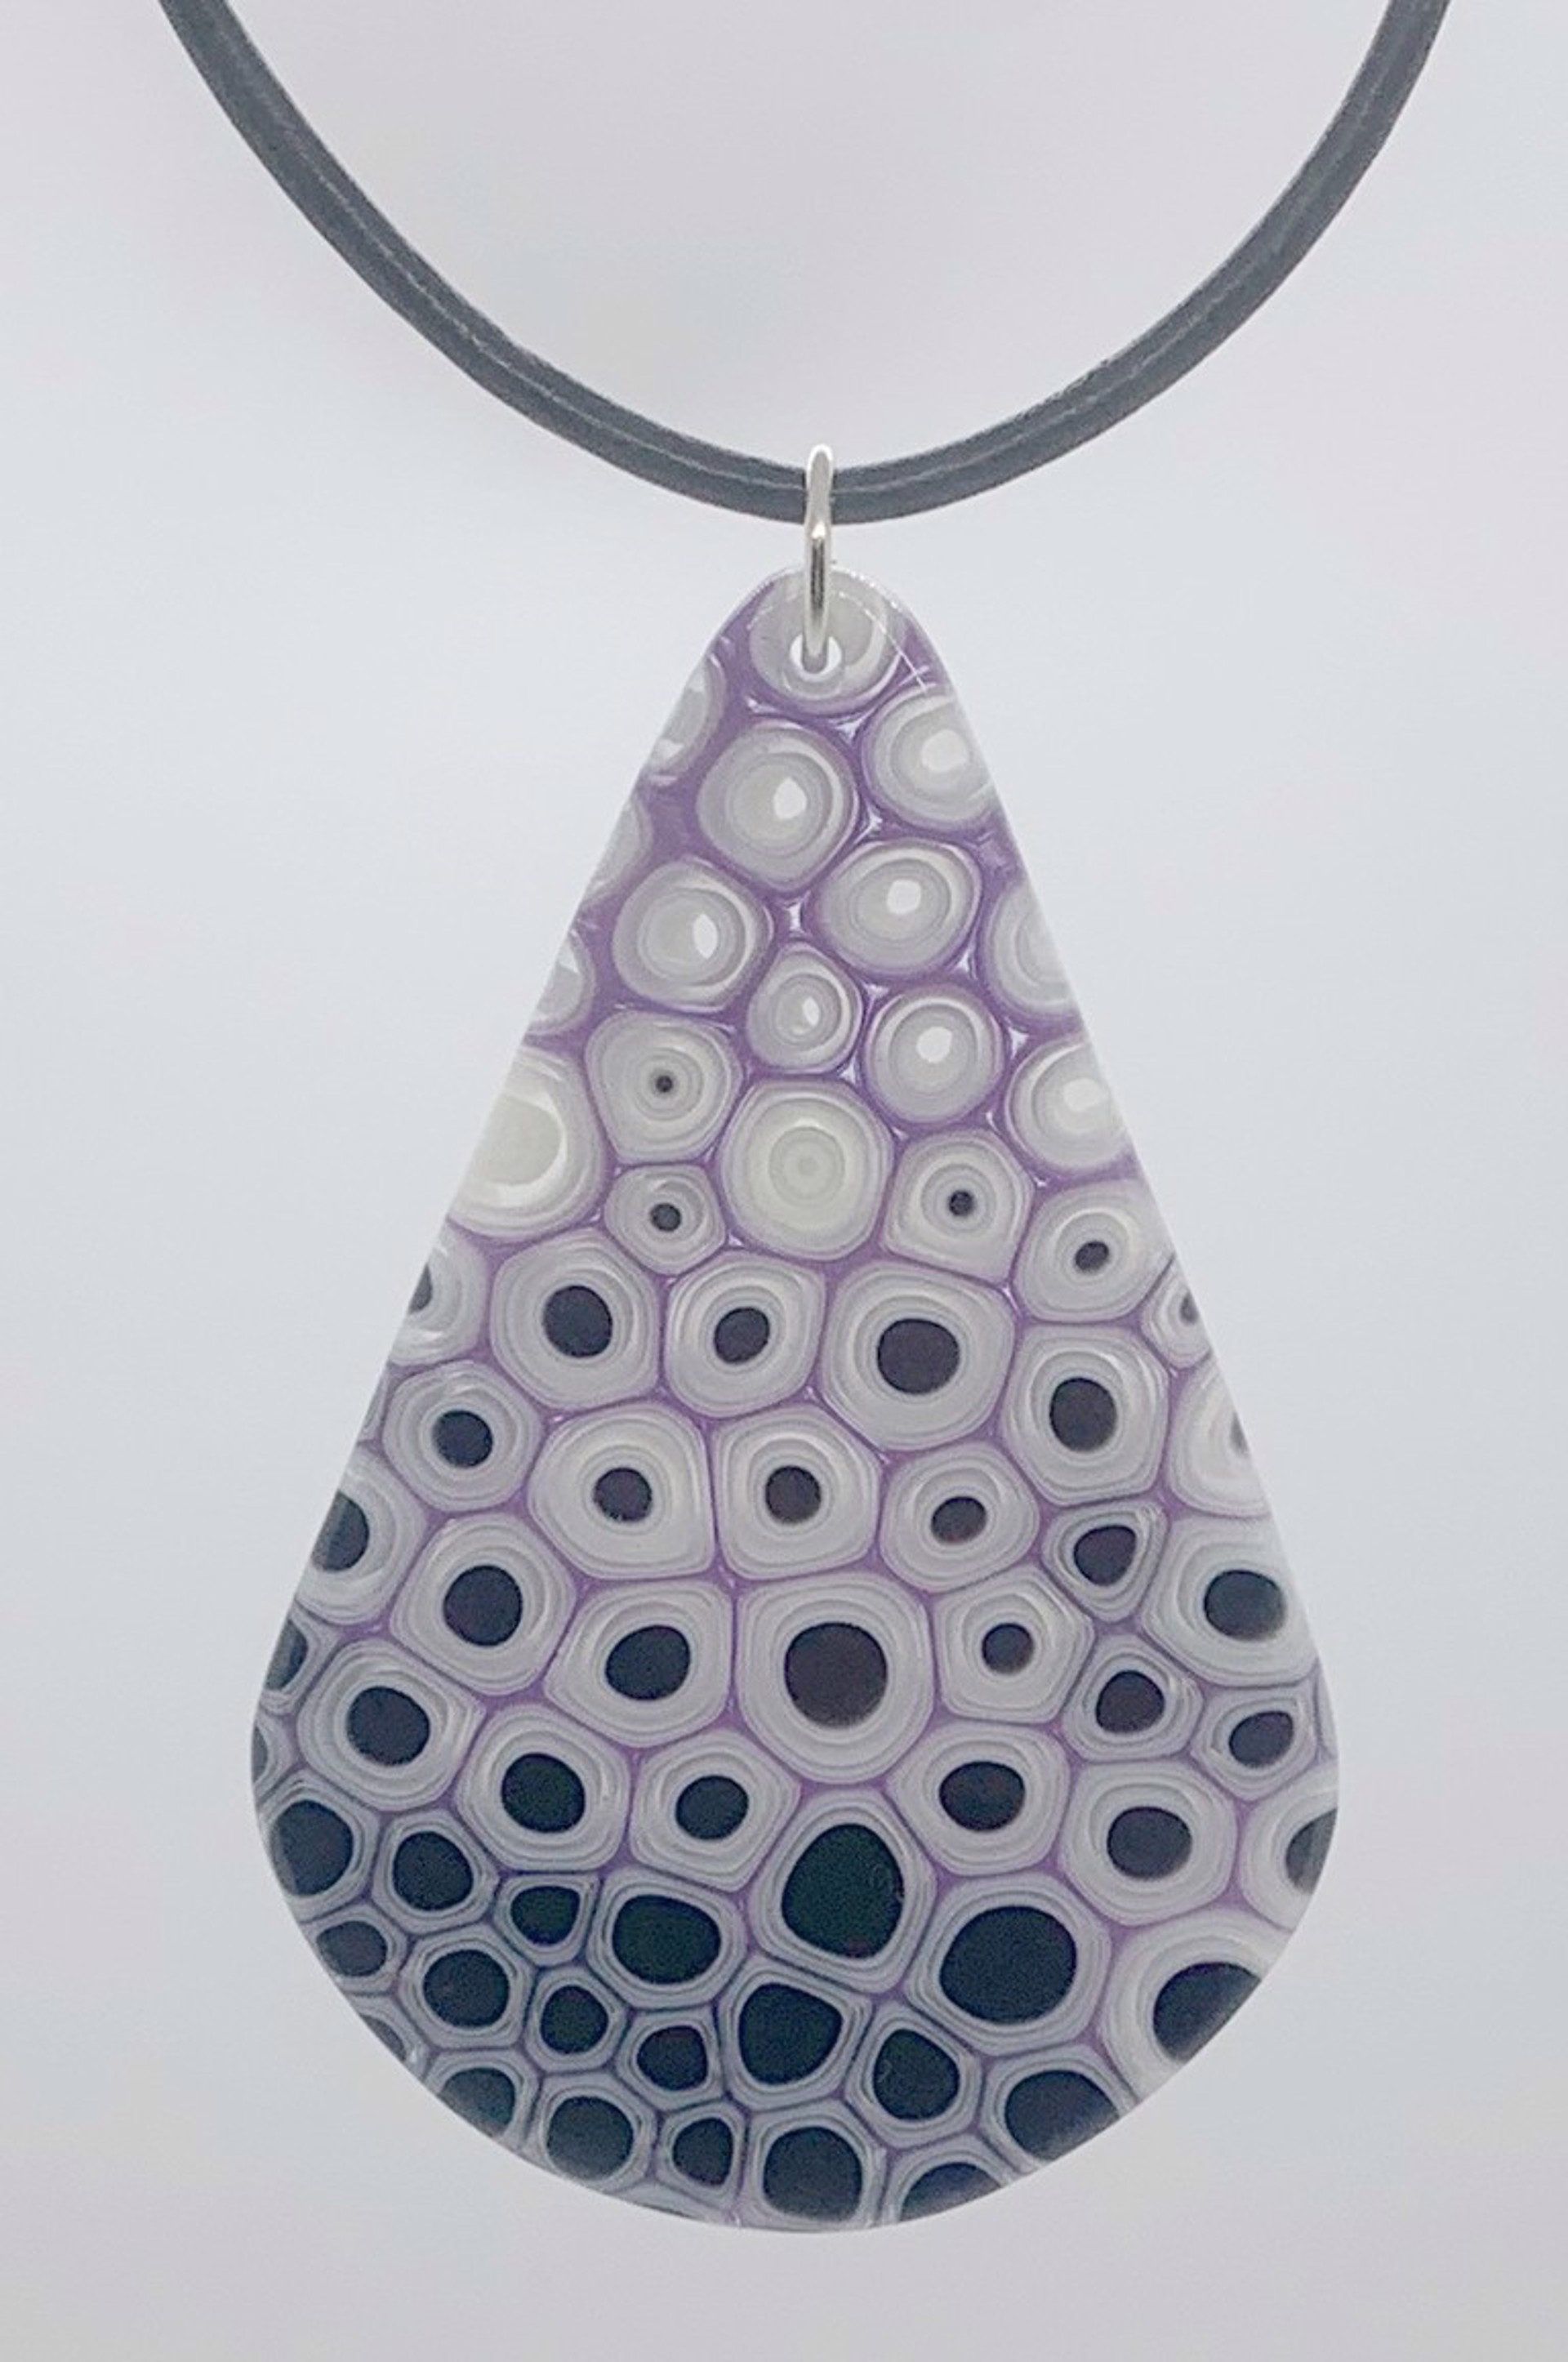 Murrini Glossy Teardrop Necklace by Chris Cox